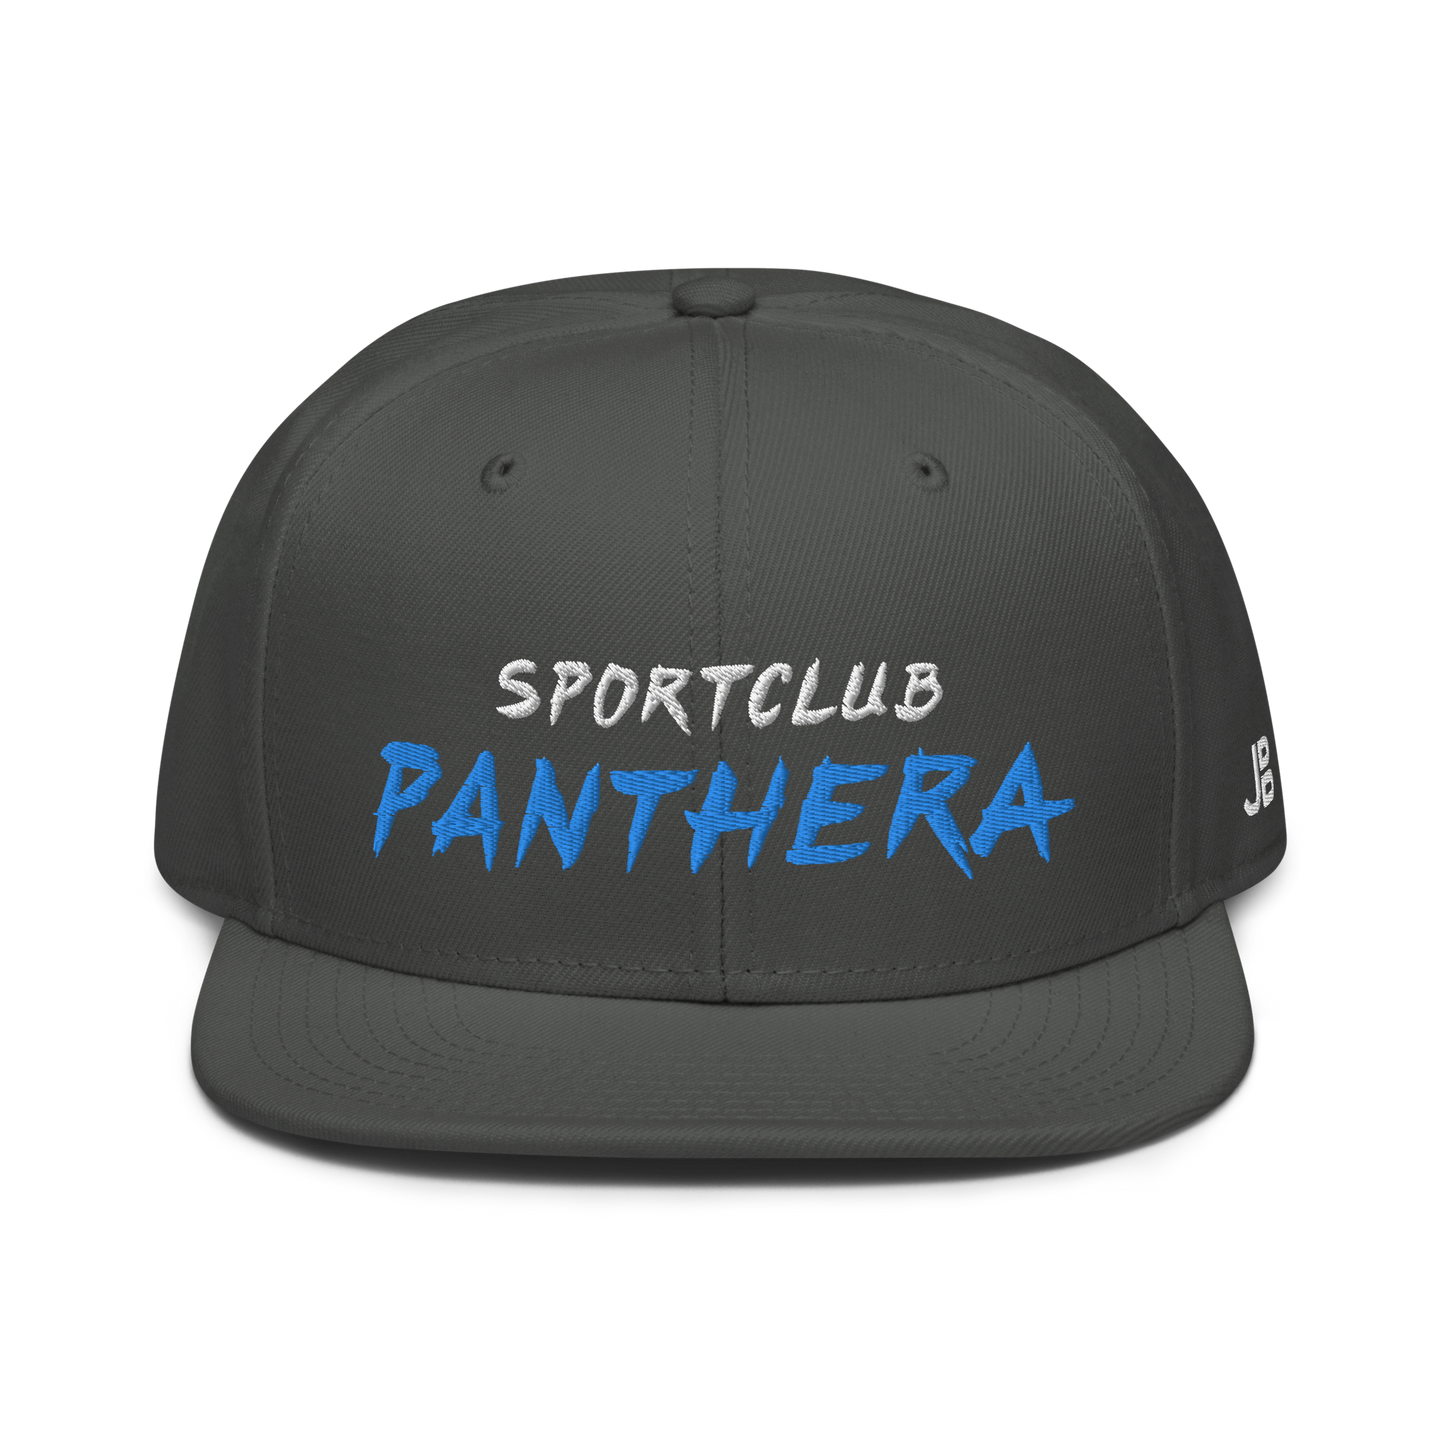 SPORTCLUB PANTHERA - Snapback Cap